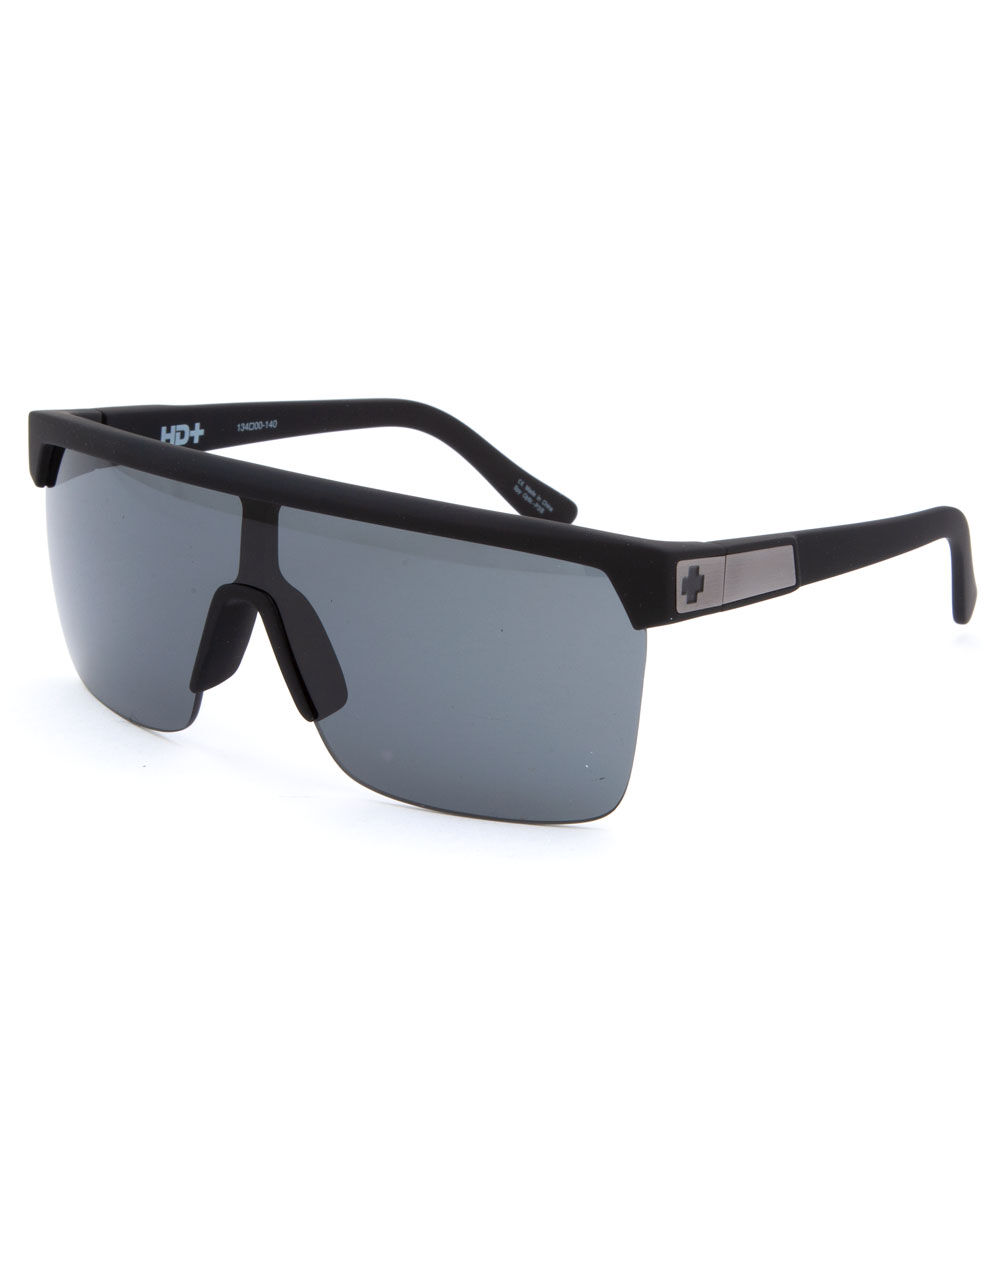 SPY Flynn 5050 Soft Matte Black Sunglasses - SOFT MATTE BLACK/HD PLUS ...